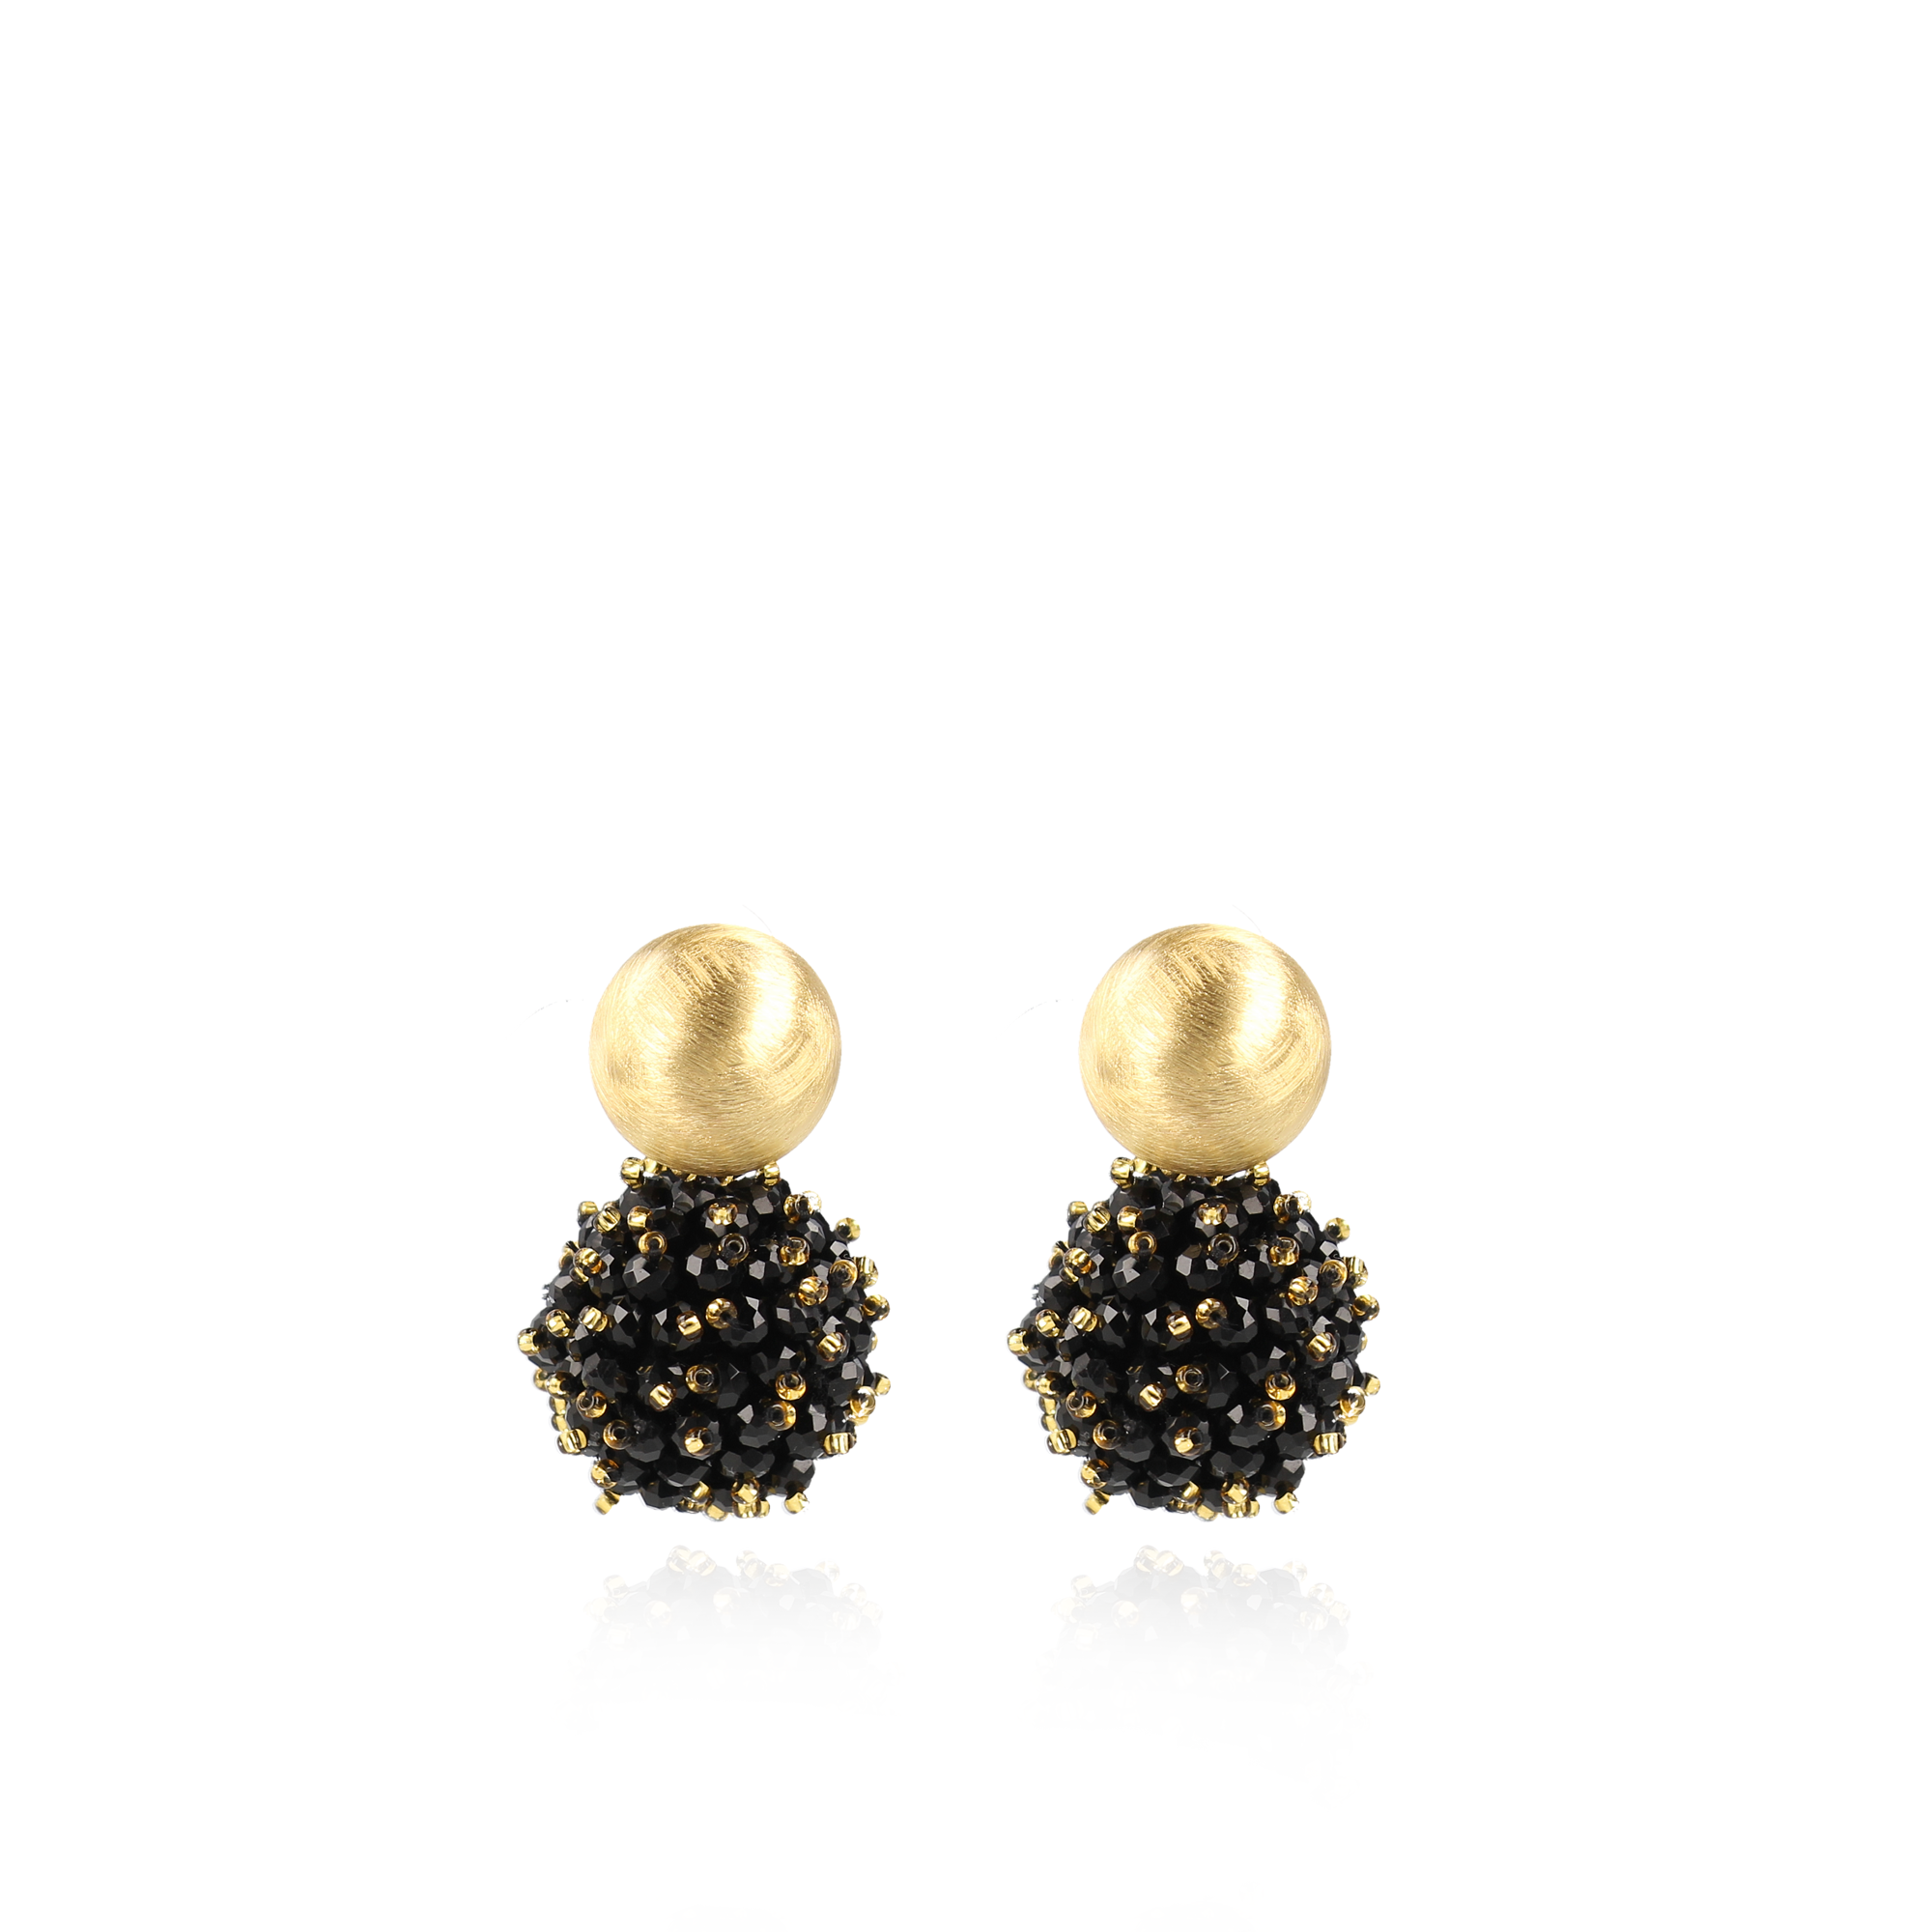 Black earrings jacky glassberry double stones globe L lott-theme.productDescriptionPage.SEO.byTheBrand